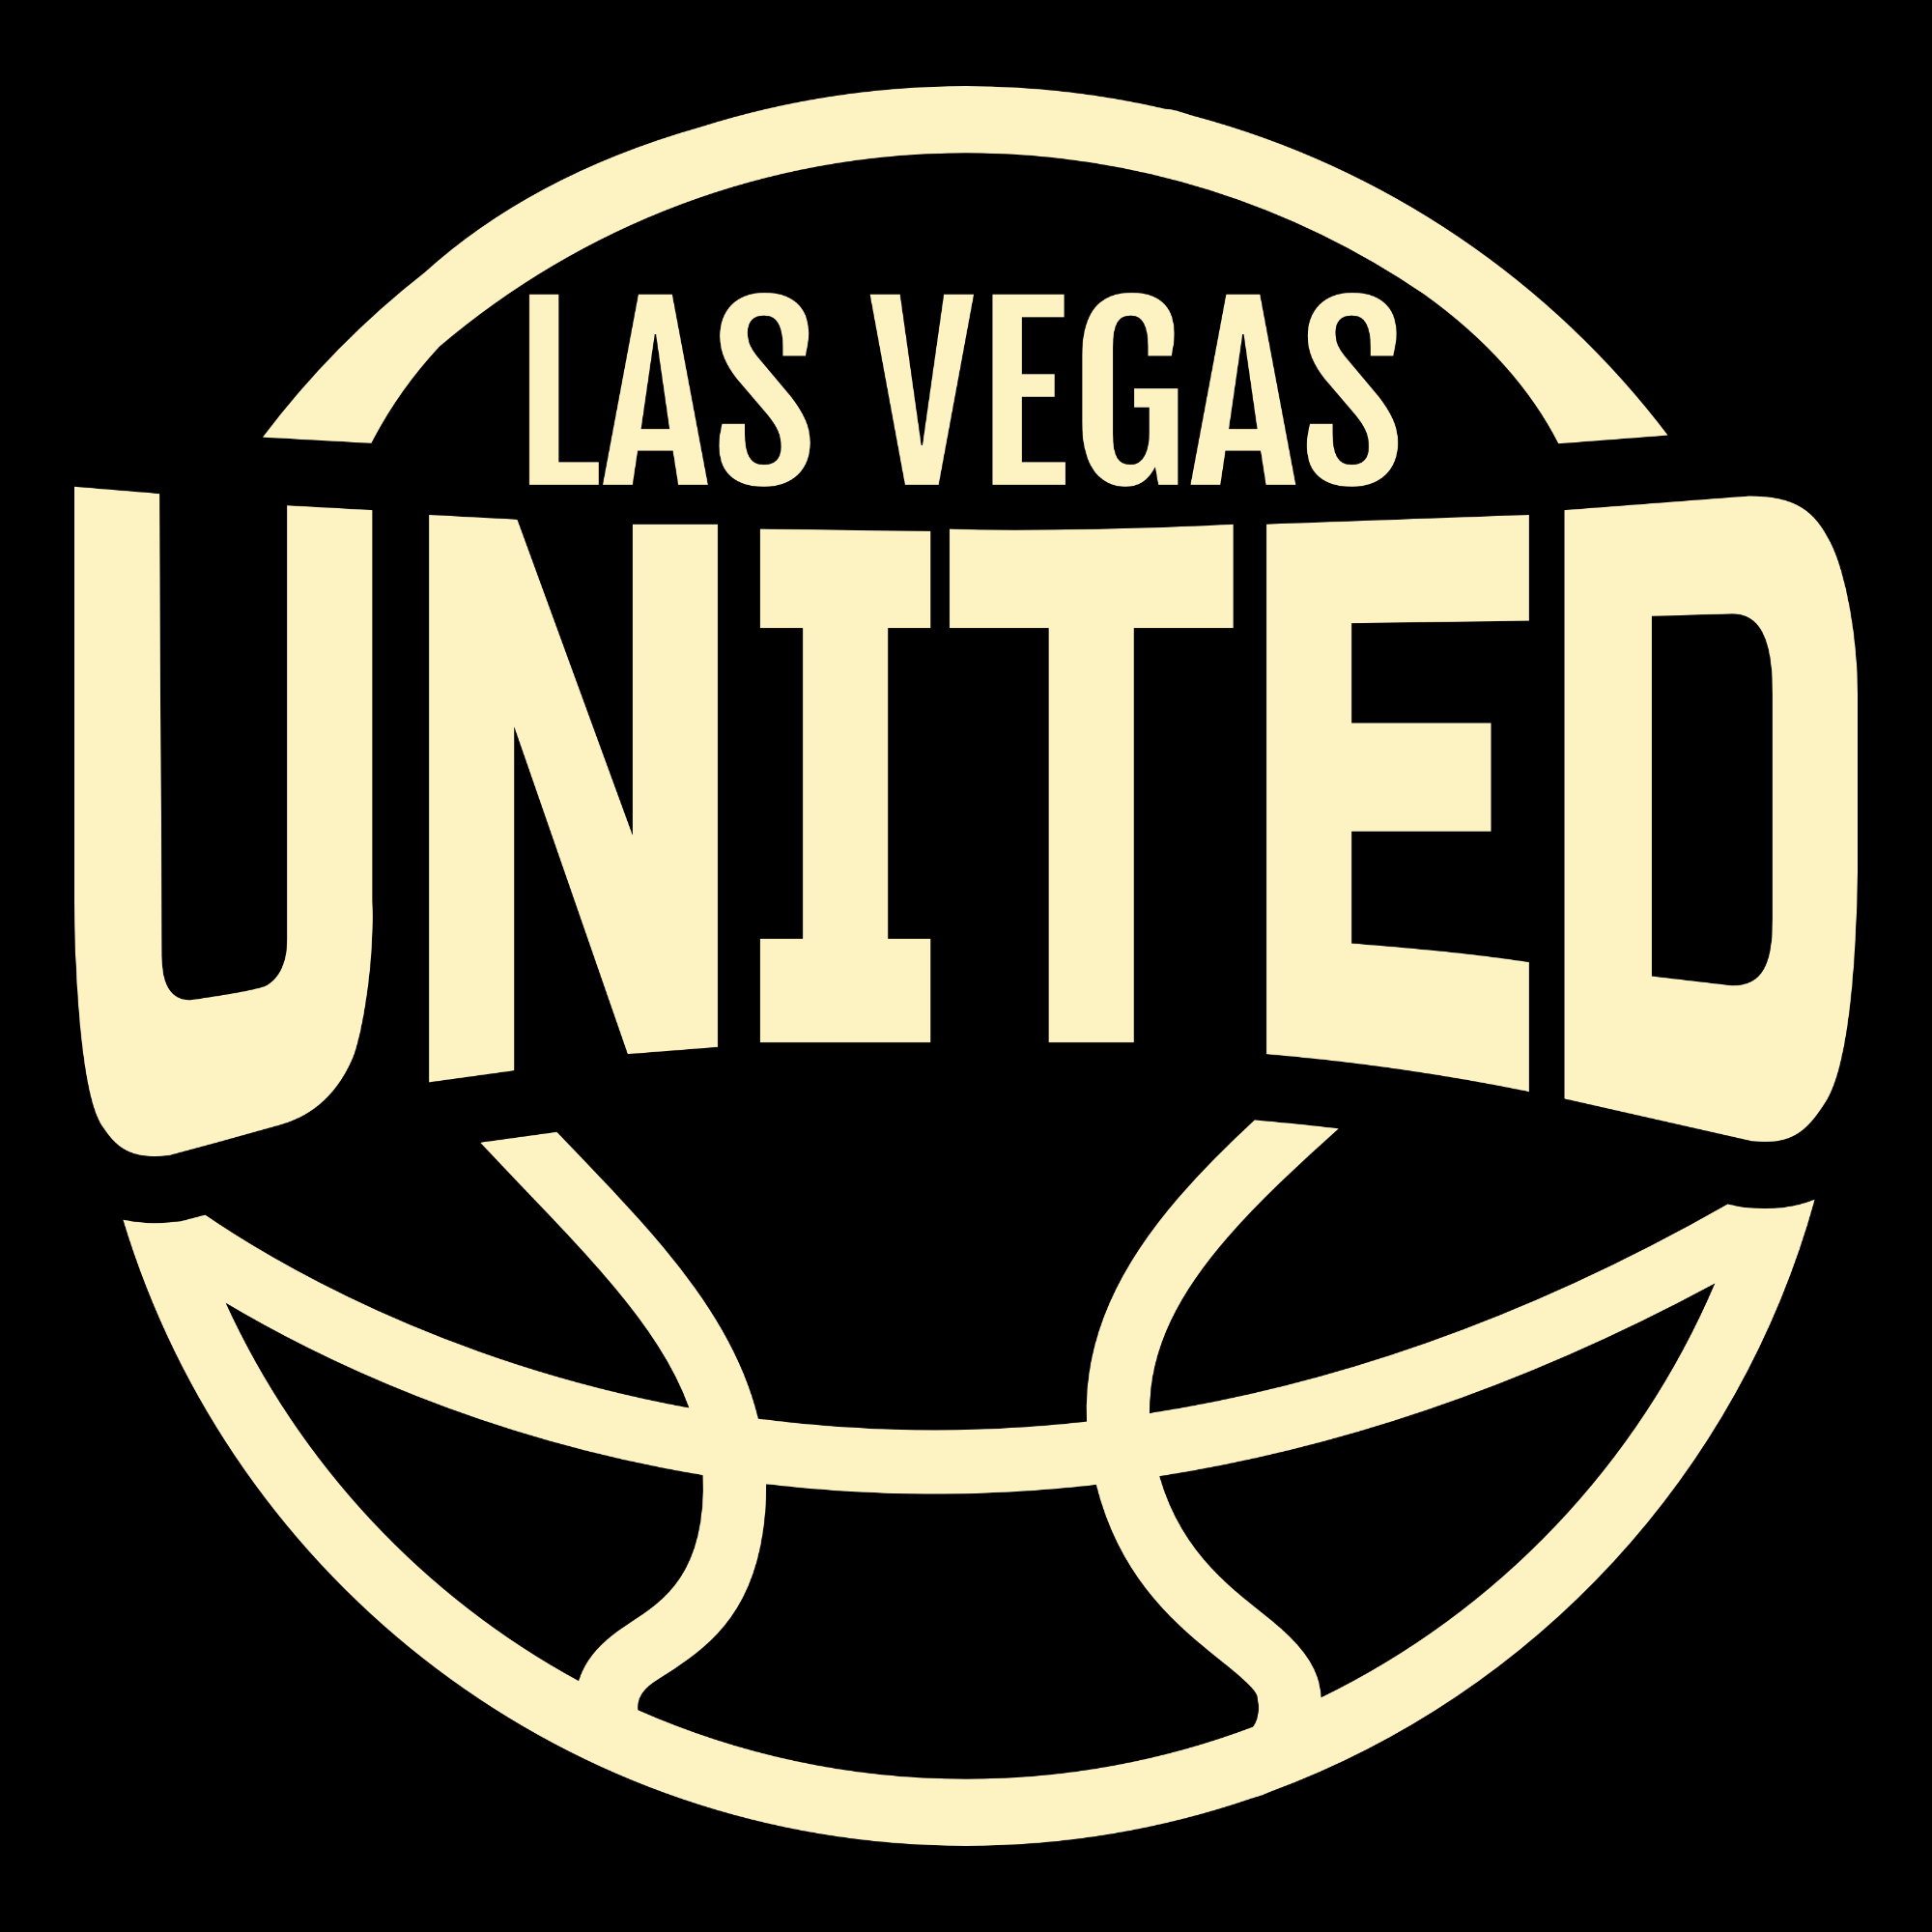 The official logo of Las Vegas United Basketball Club